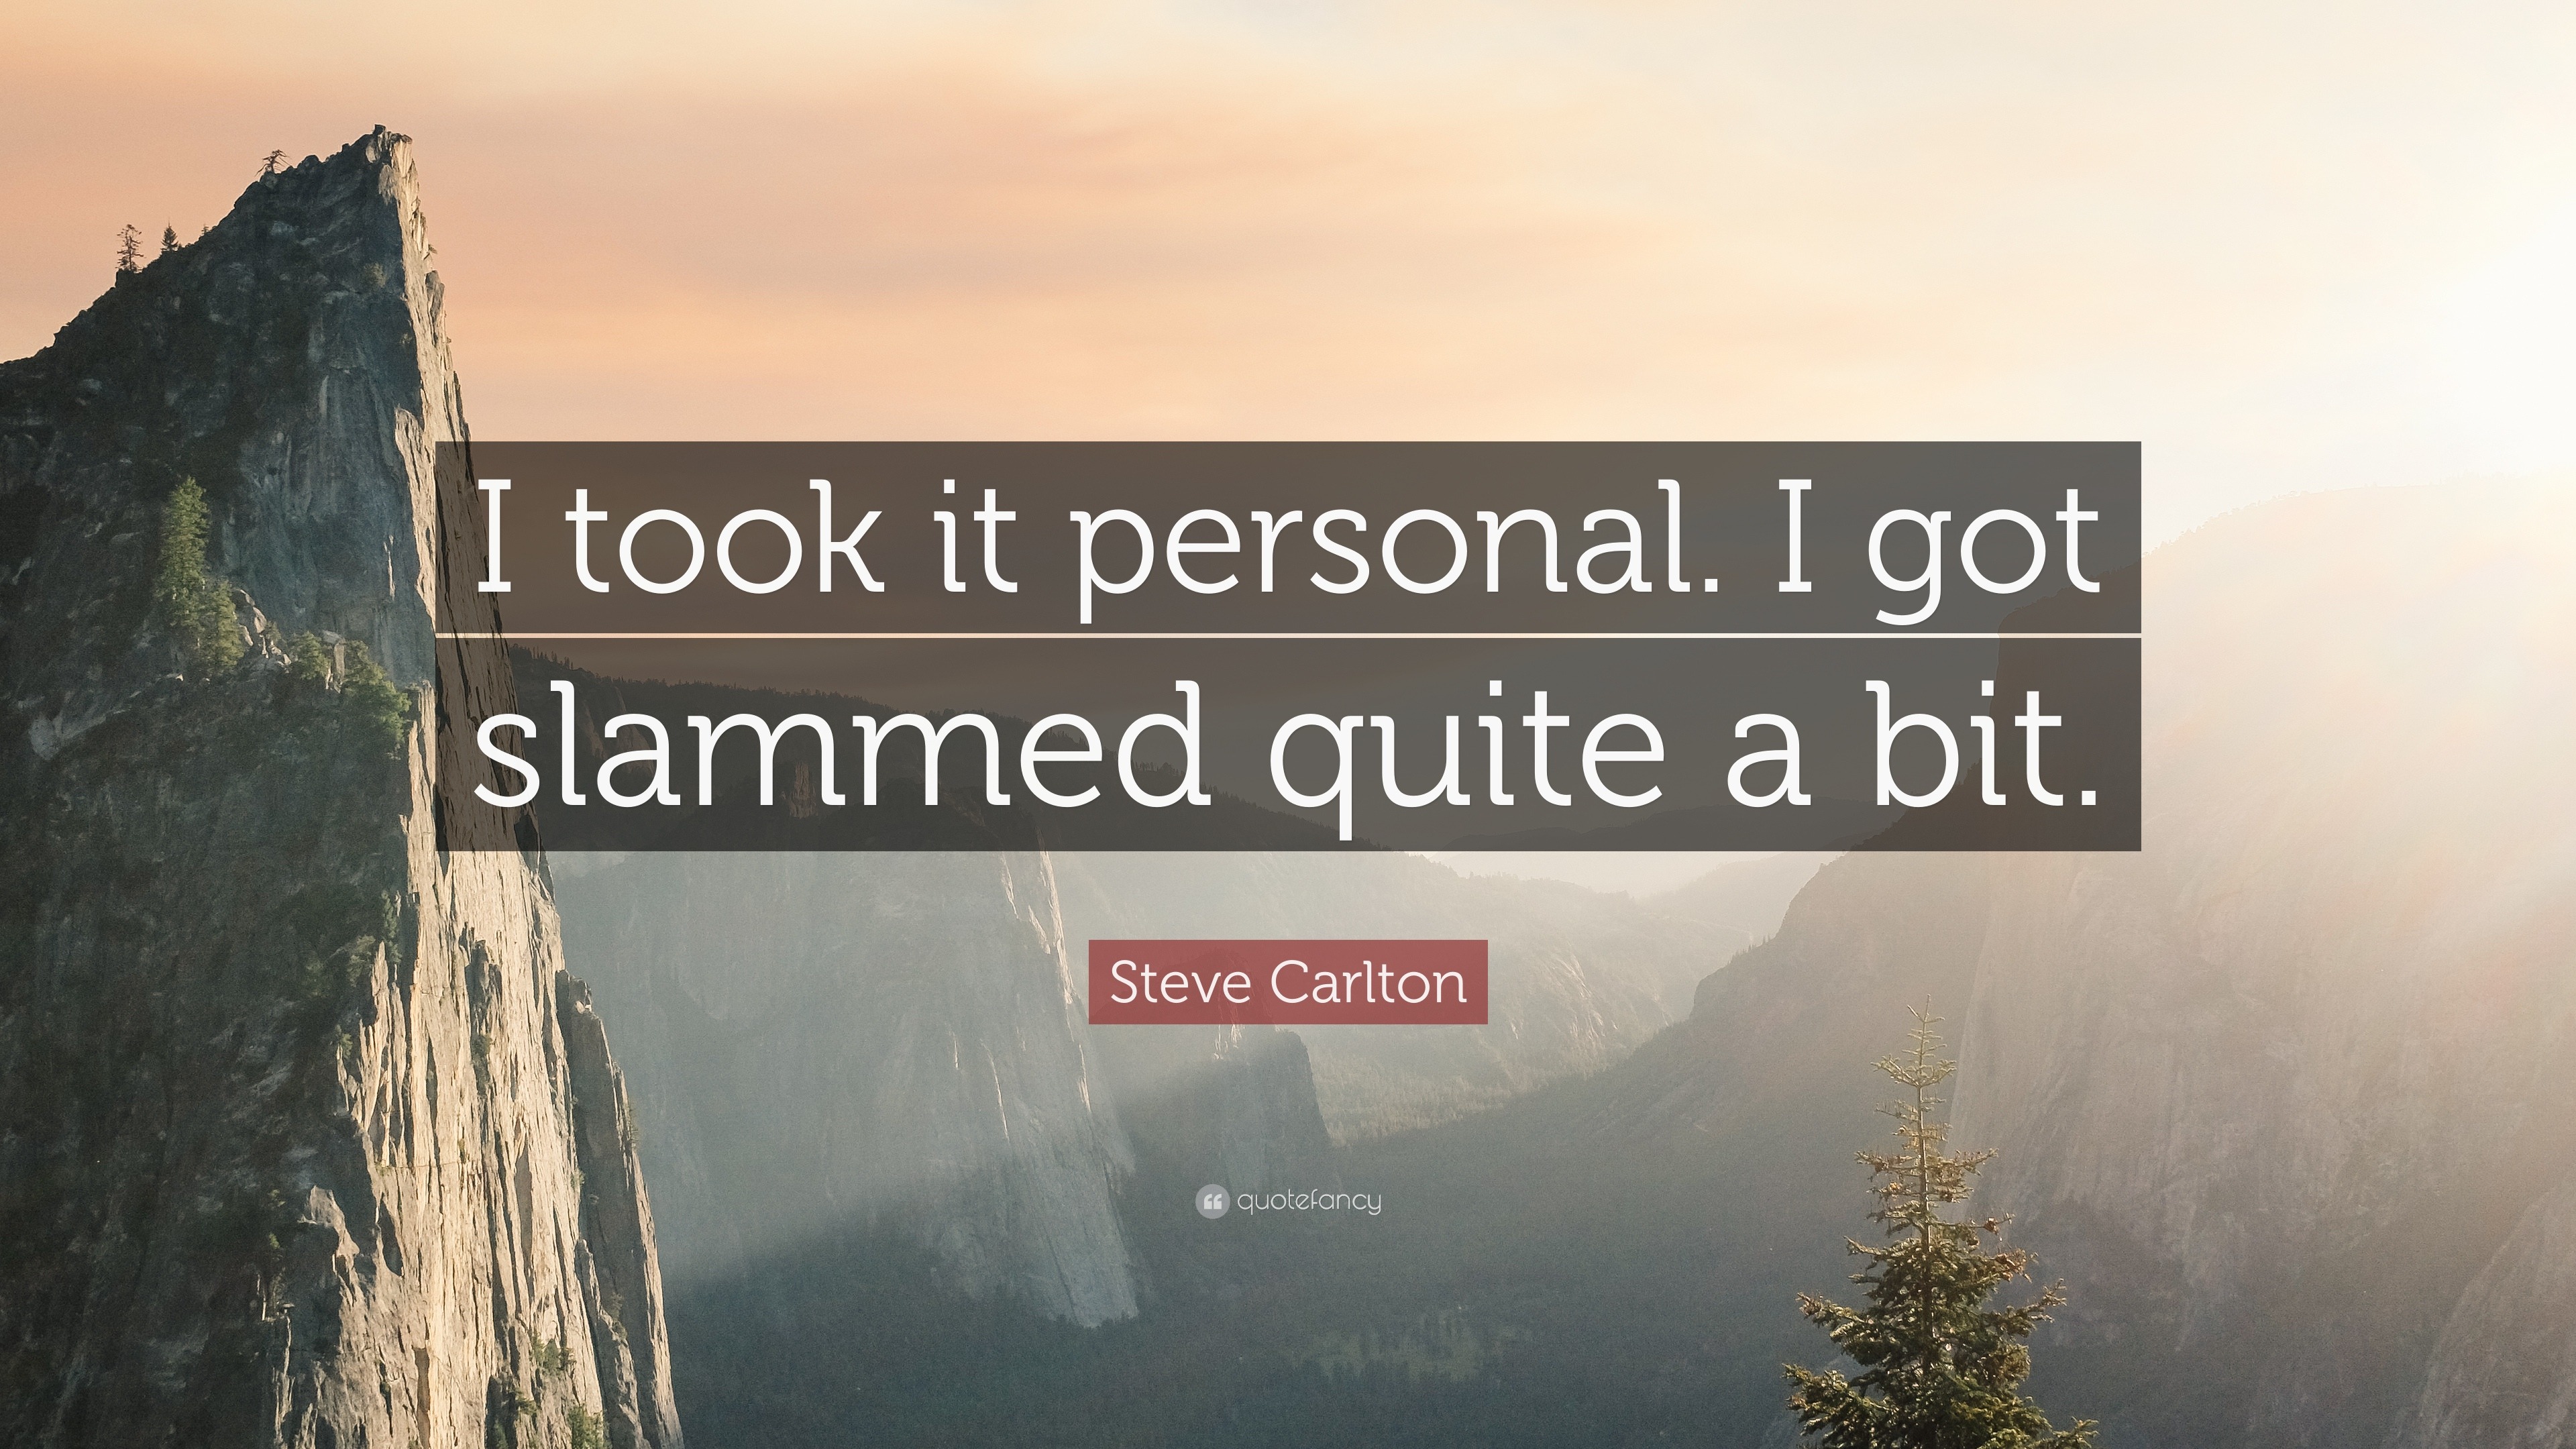 Top 15 Steve Carlton Quotes (2023 Update) - QuoteFancy